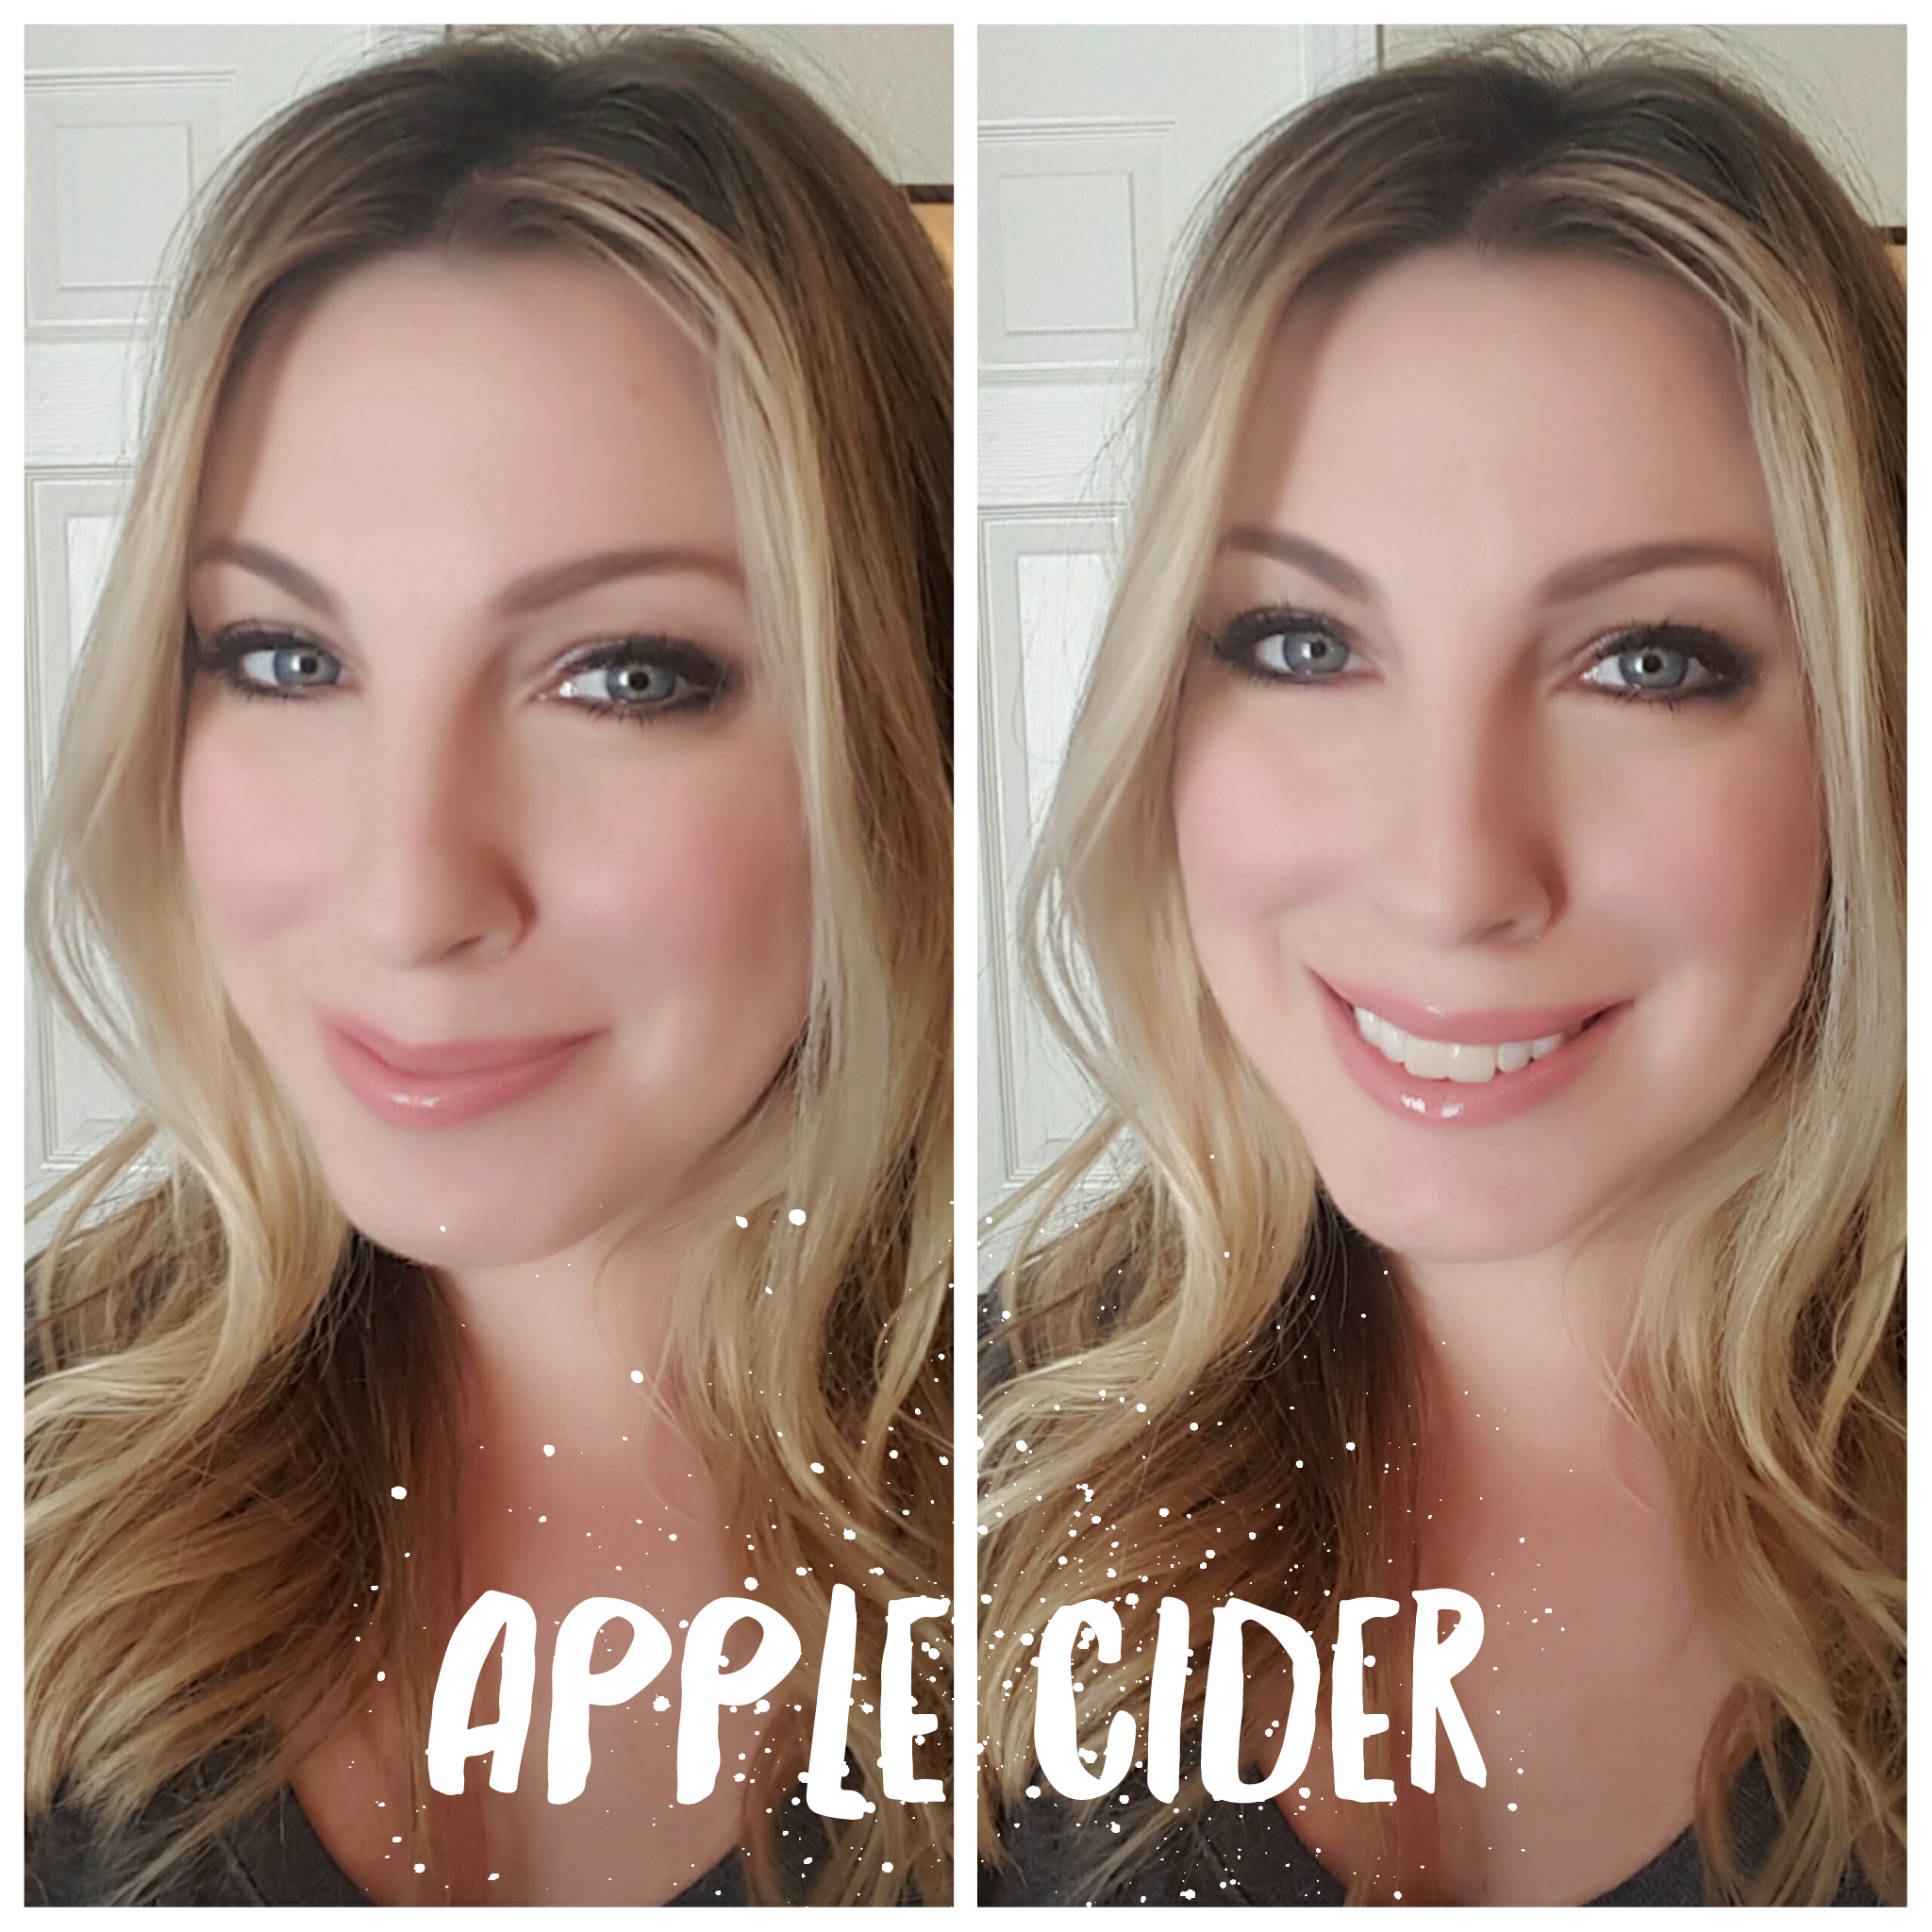 apple-cider-1